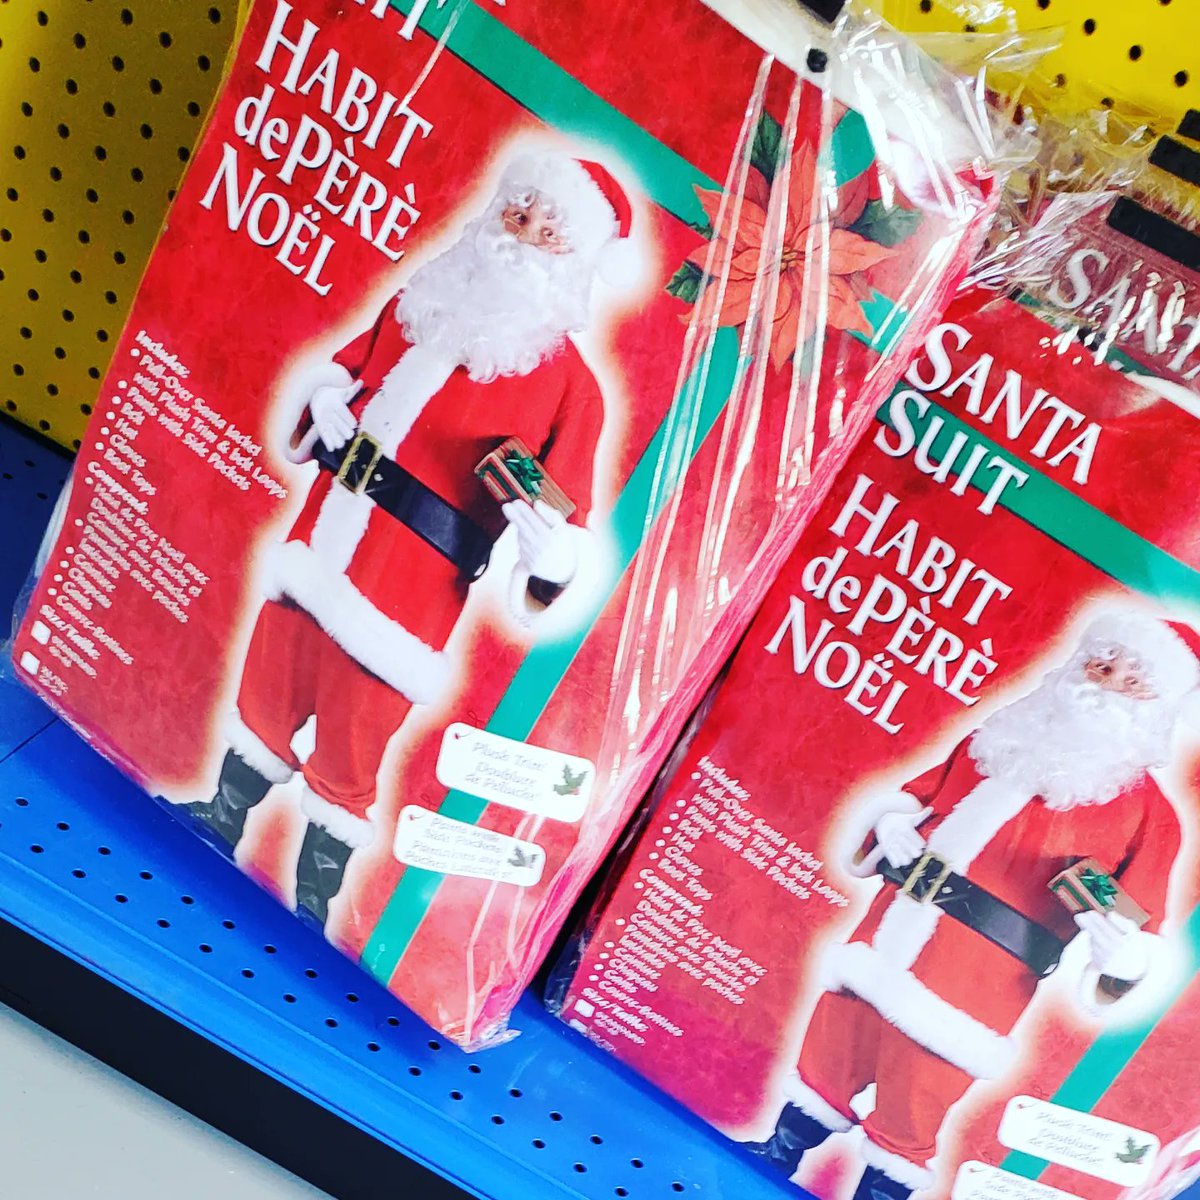 We heard #Santa is on the run.  Come stock up for your Santa run outfit New Orleans!
.
.
.
#nolapartystore #nola #santasuit #santa #nolapartysupplies #christmasdecor #christmasholidays #christmastime #neworleans